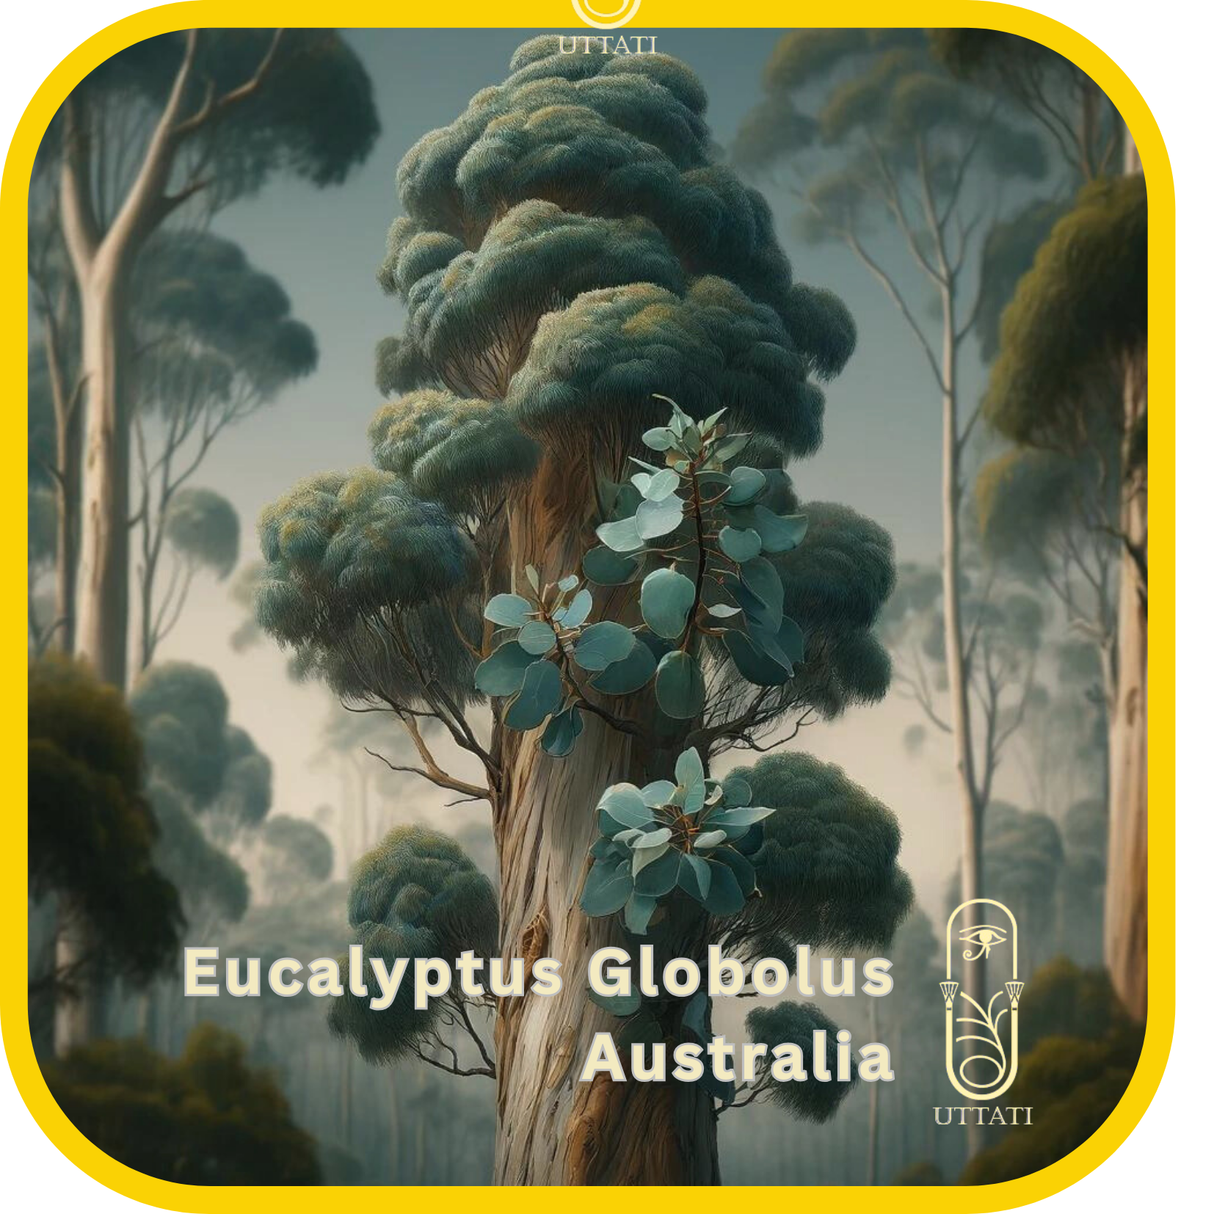 Eucalyptus Globolus Aust